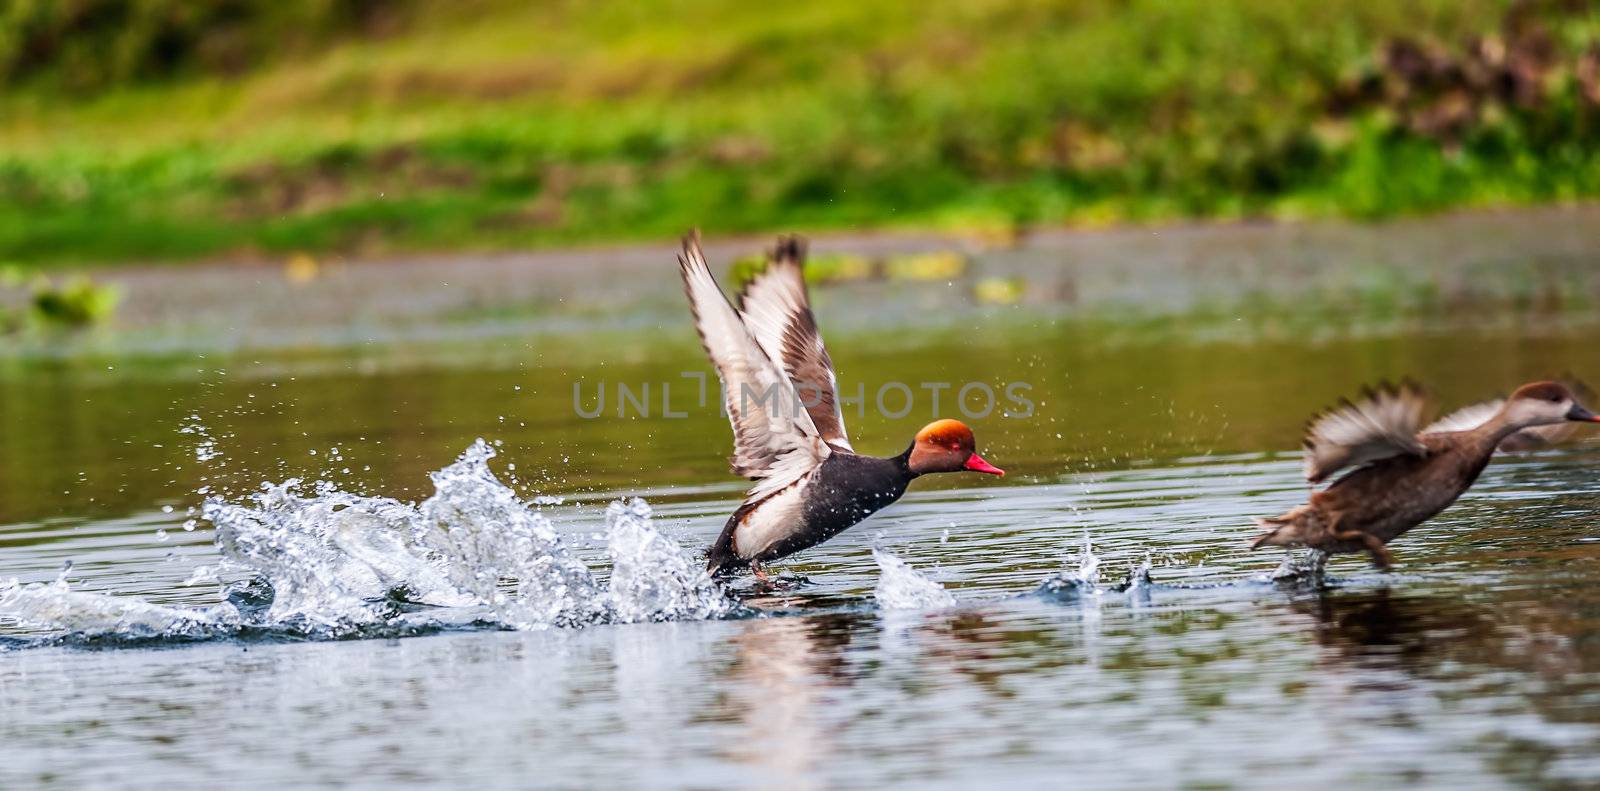 Red-crested Pochard,migratory, bird, Diving duck, Rhodonessa ruf by srijanroyc